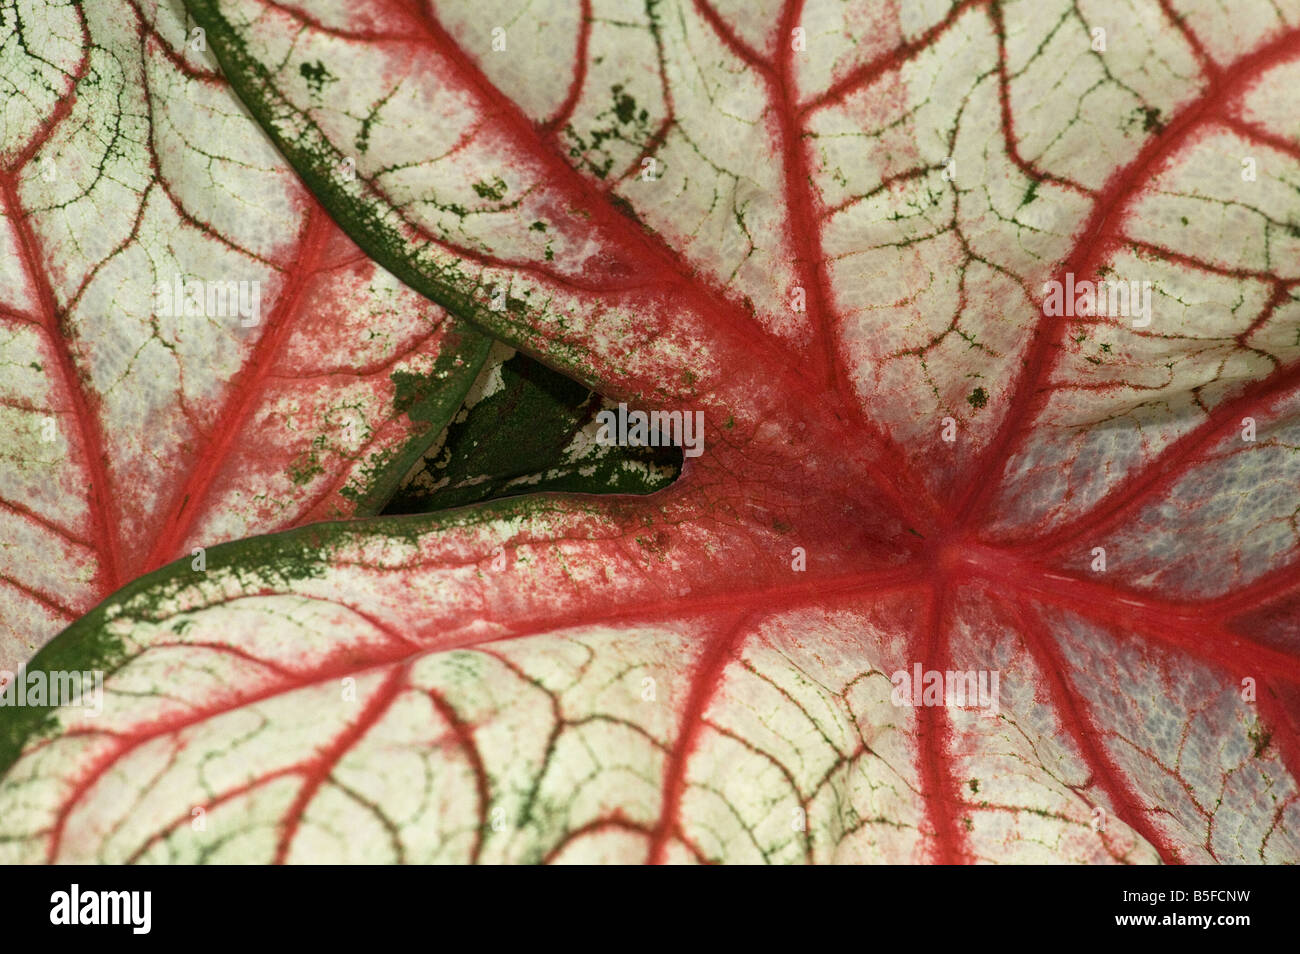 Caladium leaf showing striking venation pattern Stock Photo